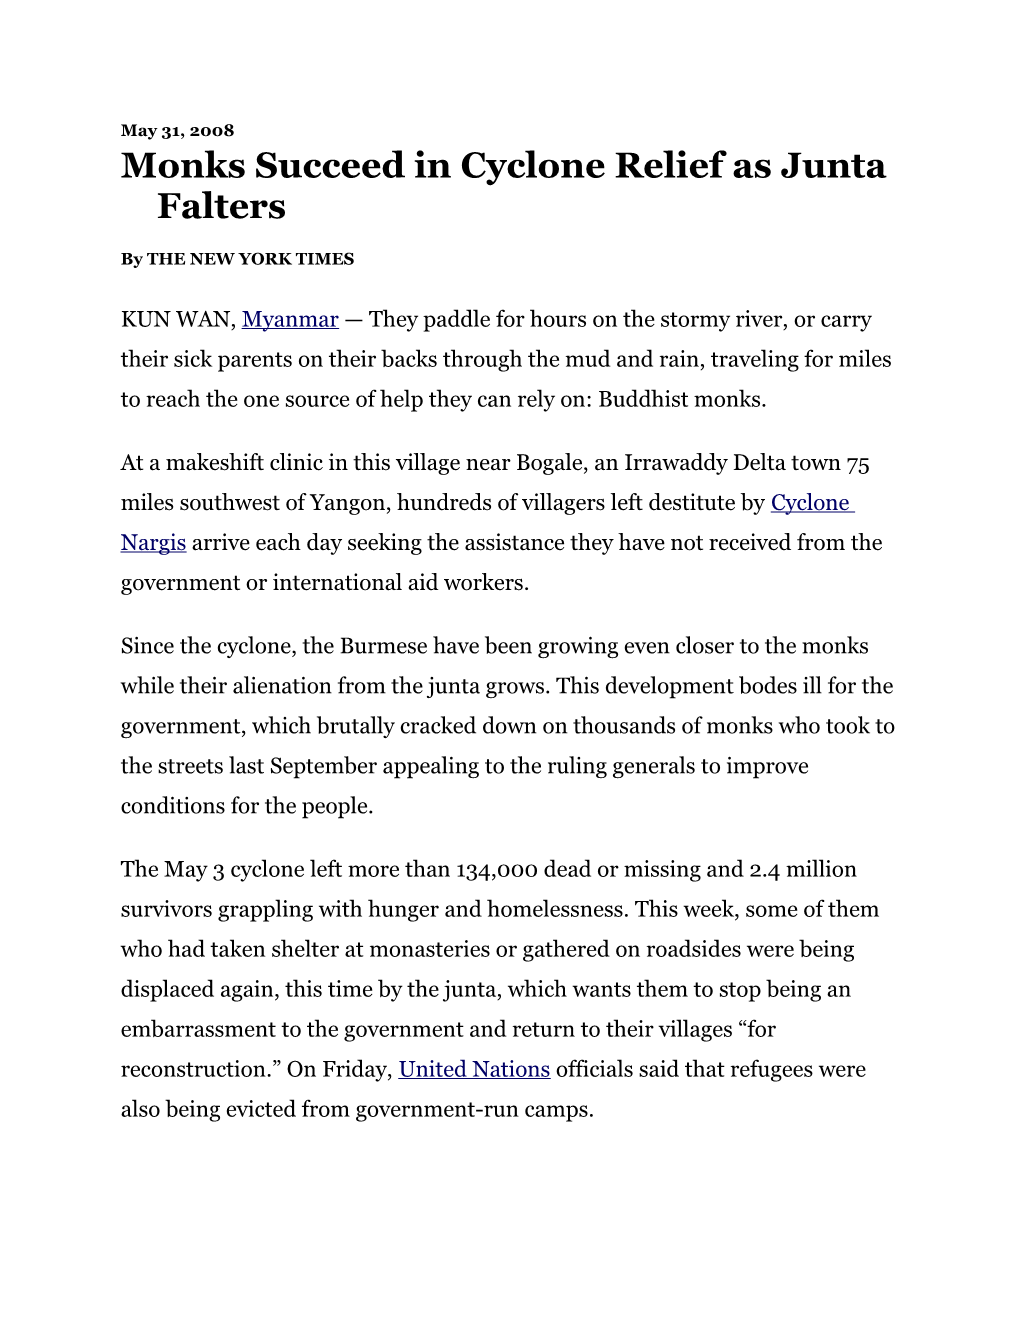 Monks Succeed in Cyclone Relief As Junta Falters